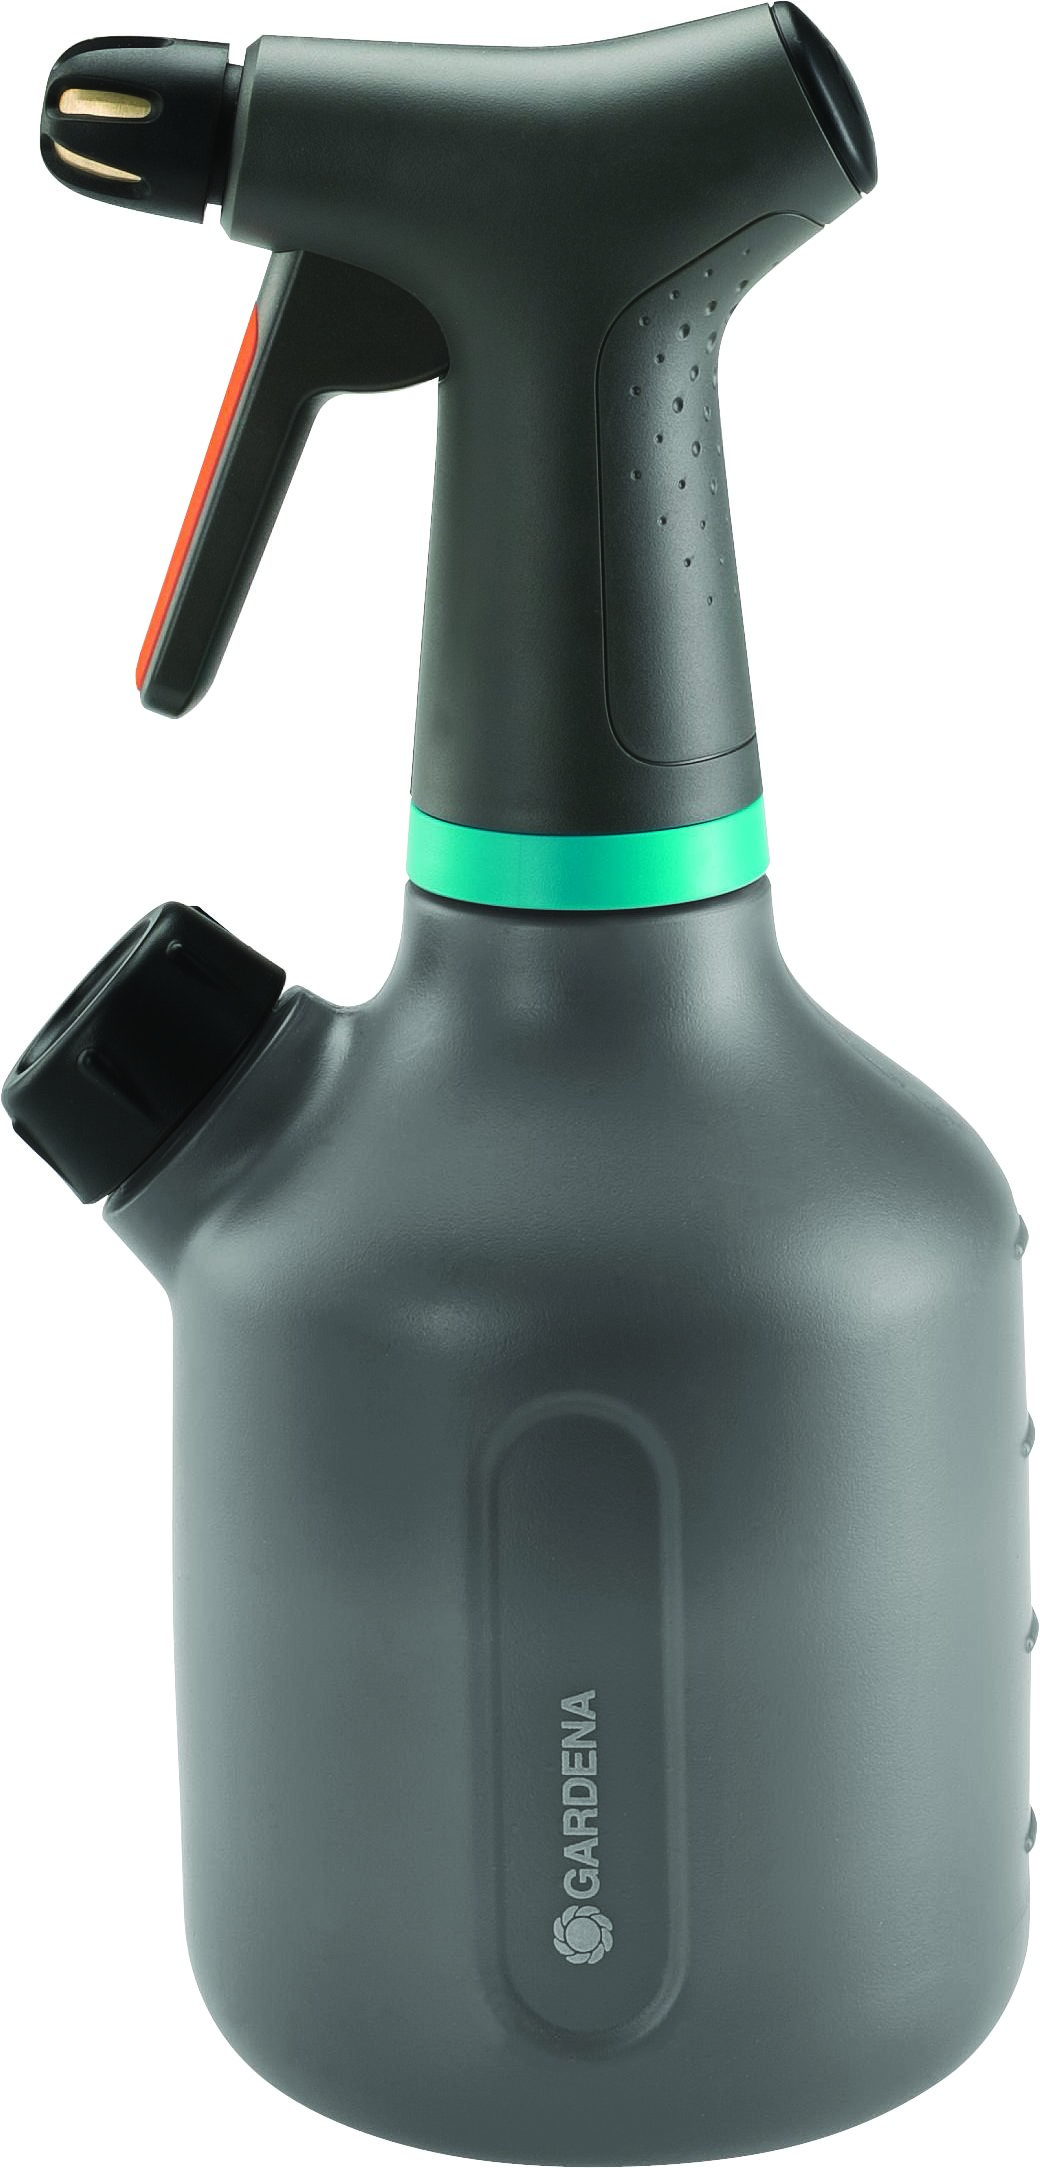 GARDENA Pump Sprayer 1 L